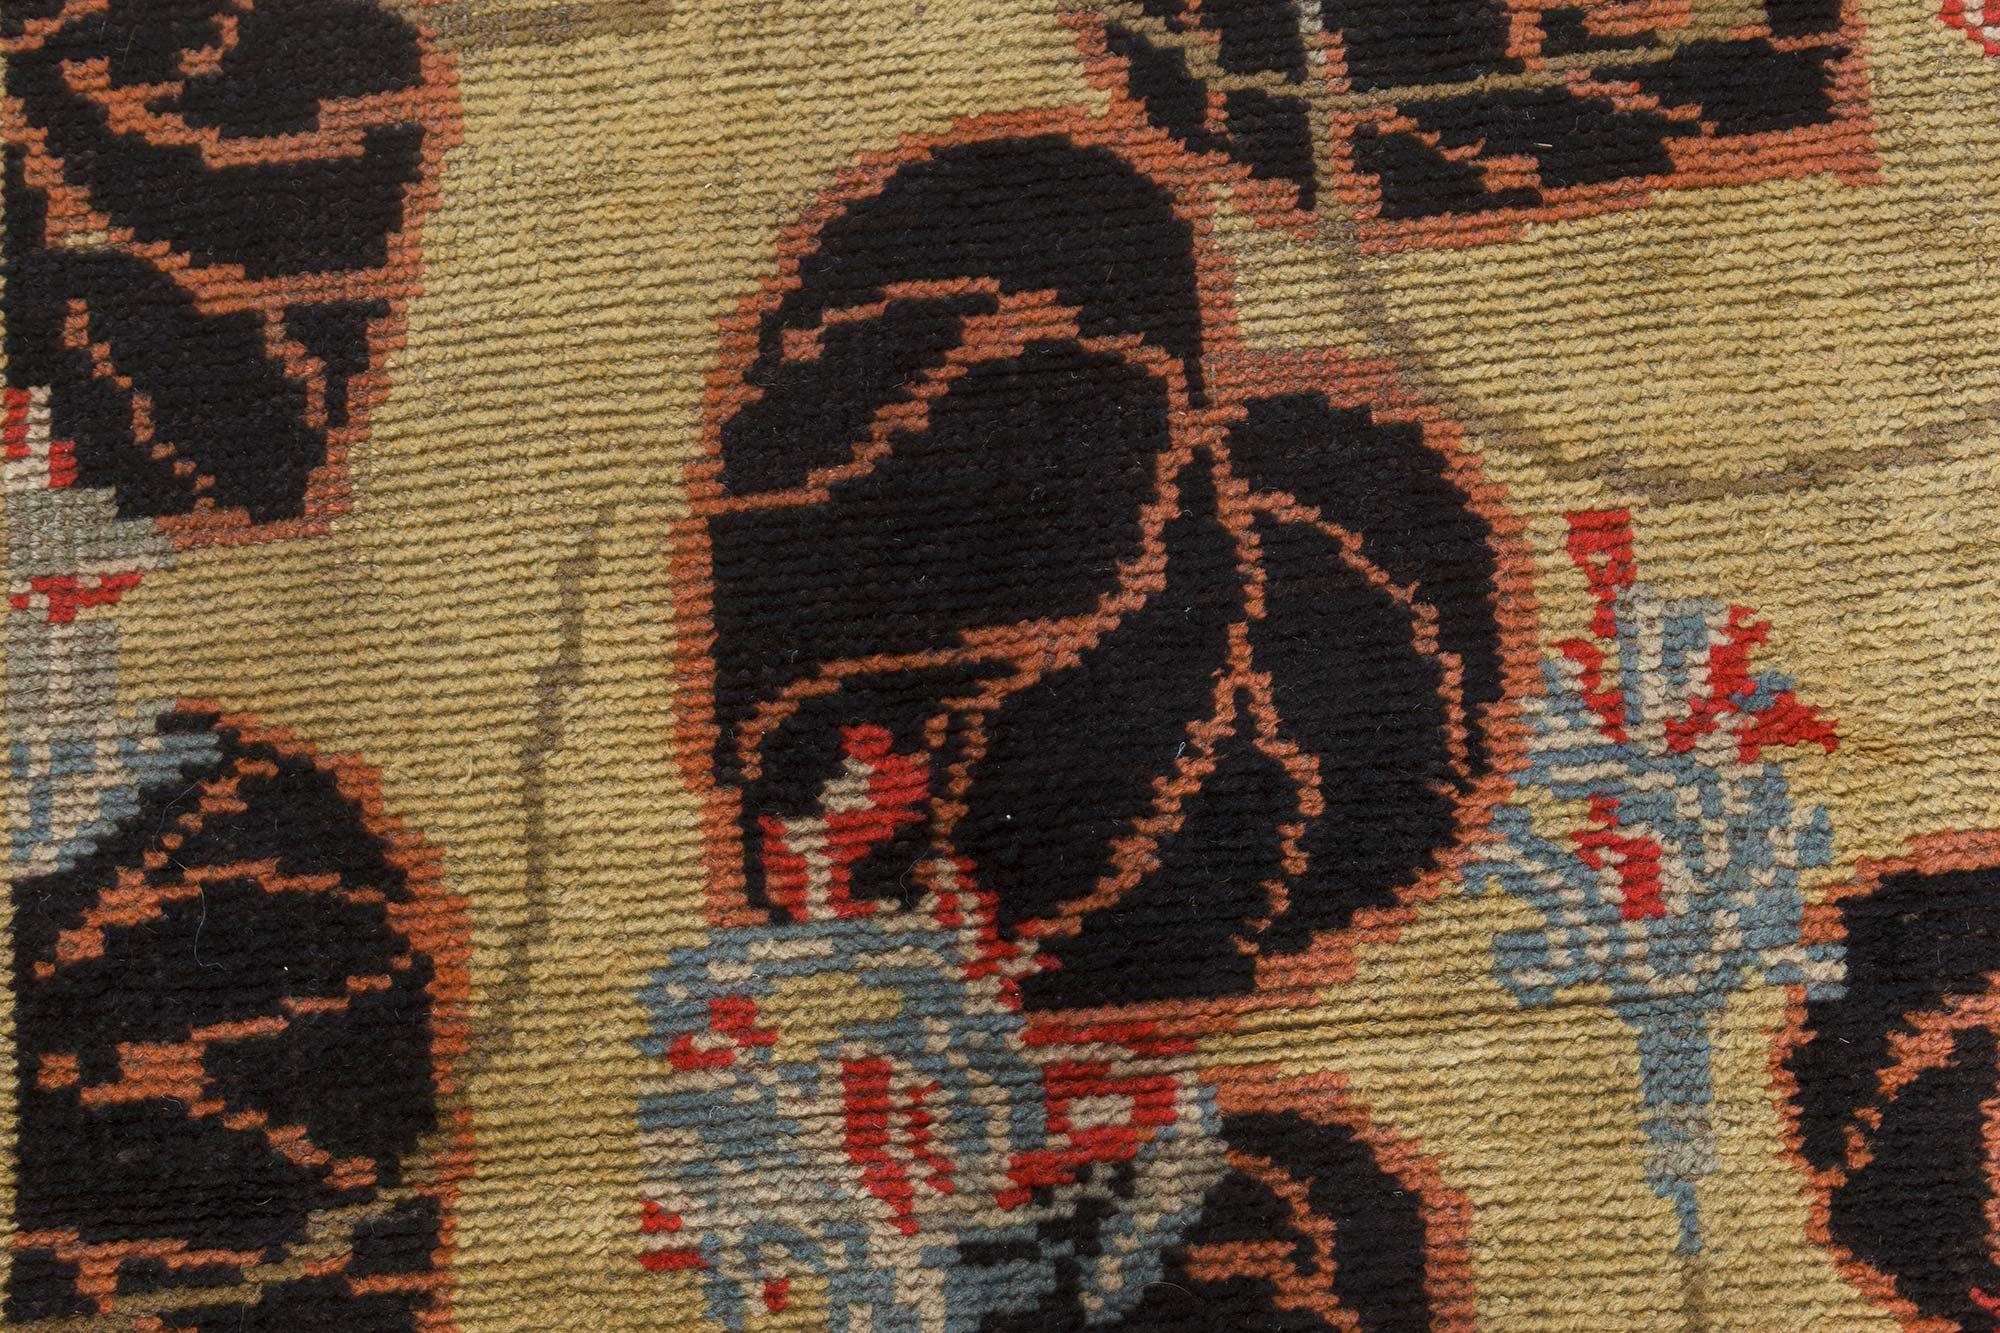 Vintage Irish Botanic Hand Knotted Wool Carpet
Size: 8'8